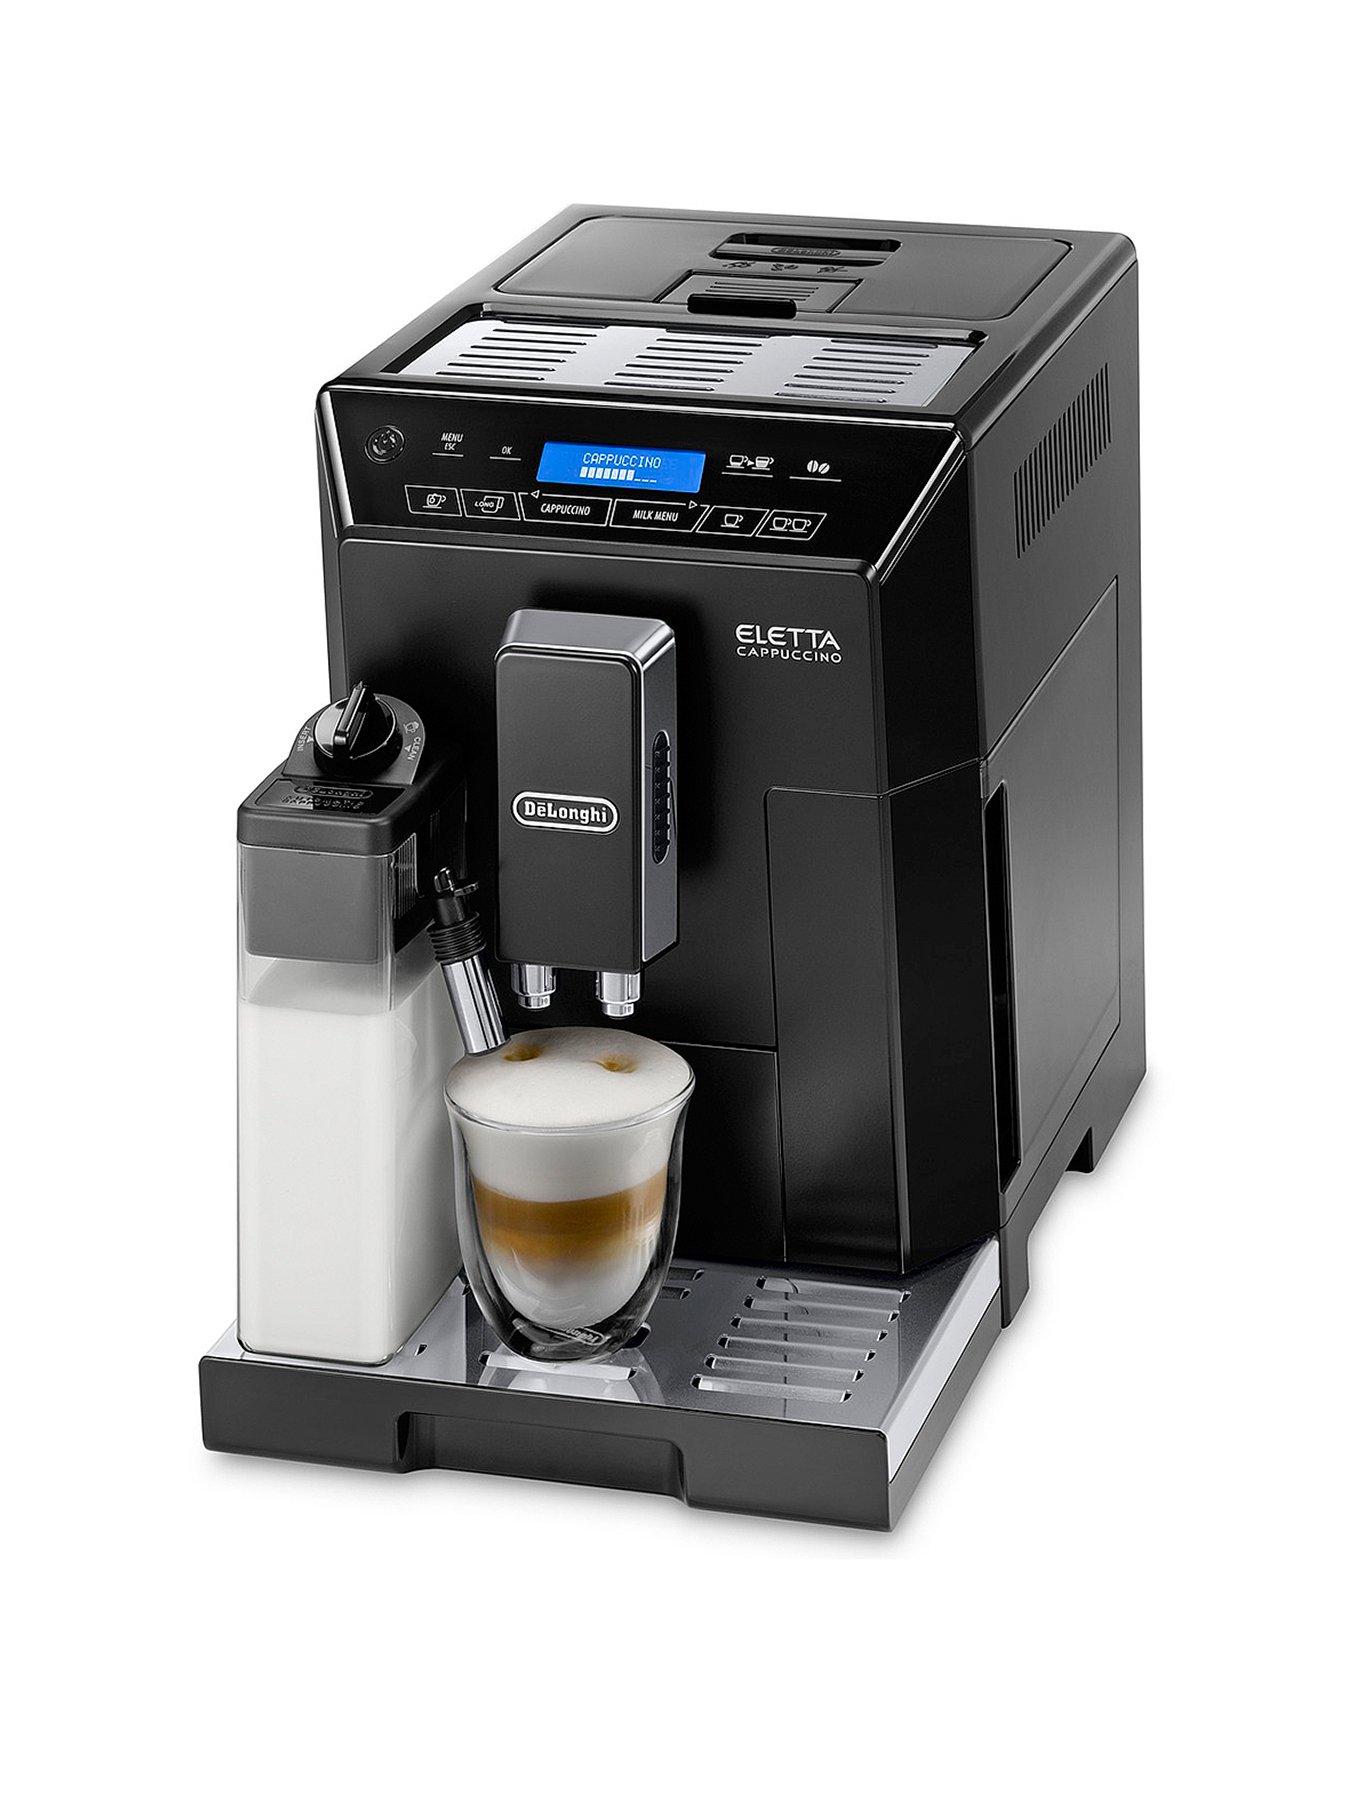 https://media.very.ie/i/littlewoodsireland/4GCMG_SQ1_0000000004_BLACK_SLf/delonghi-eletta-cappuccino-automatic-bean-to-cup-coffee-machine-with-auto-milk-nbspecam44660b.jpg?$180x240_retinamobilex2$&$roundel_lwireland$&p1_img=vsp_pink&p3_img=video_roundel